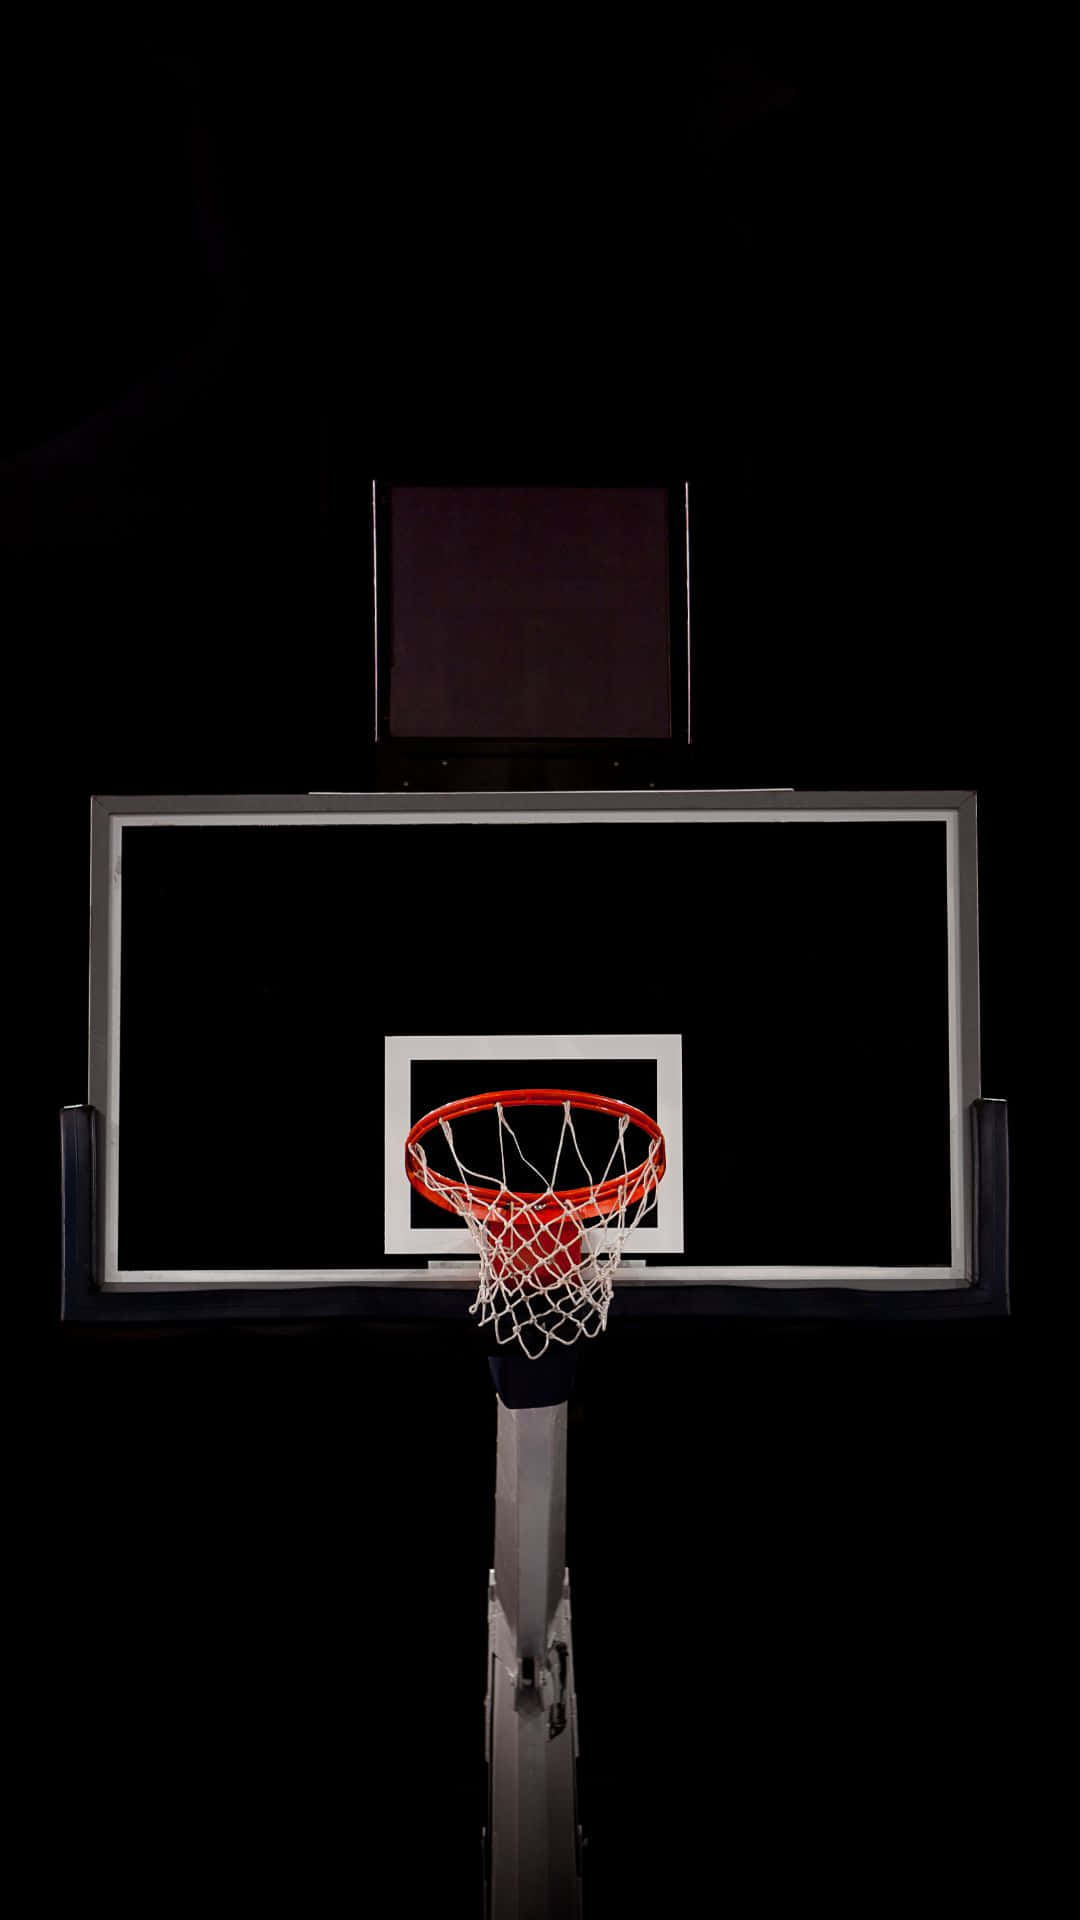 Basketball Hoop Against Black Background Background